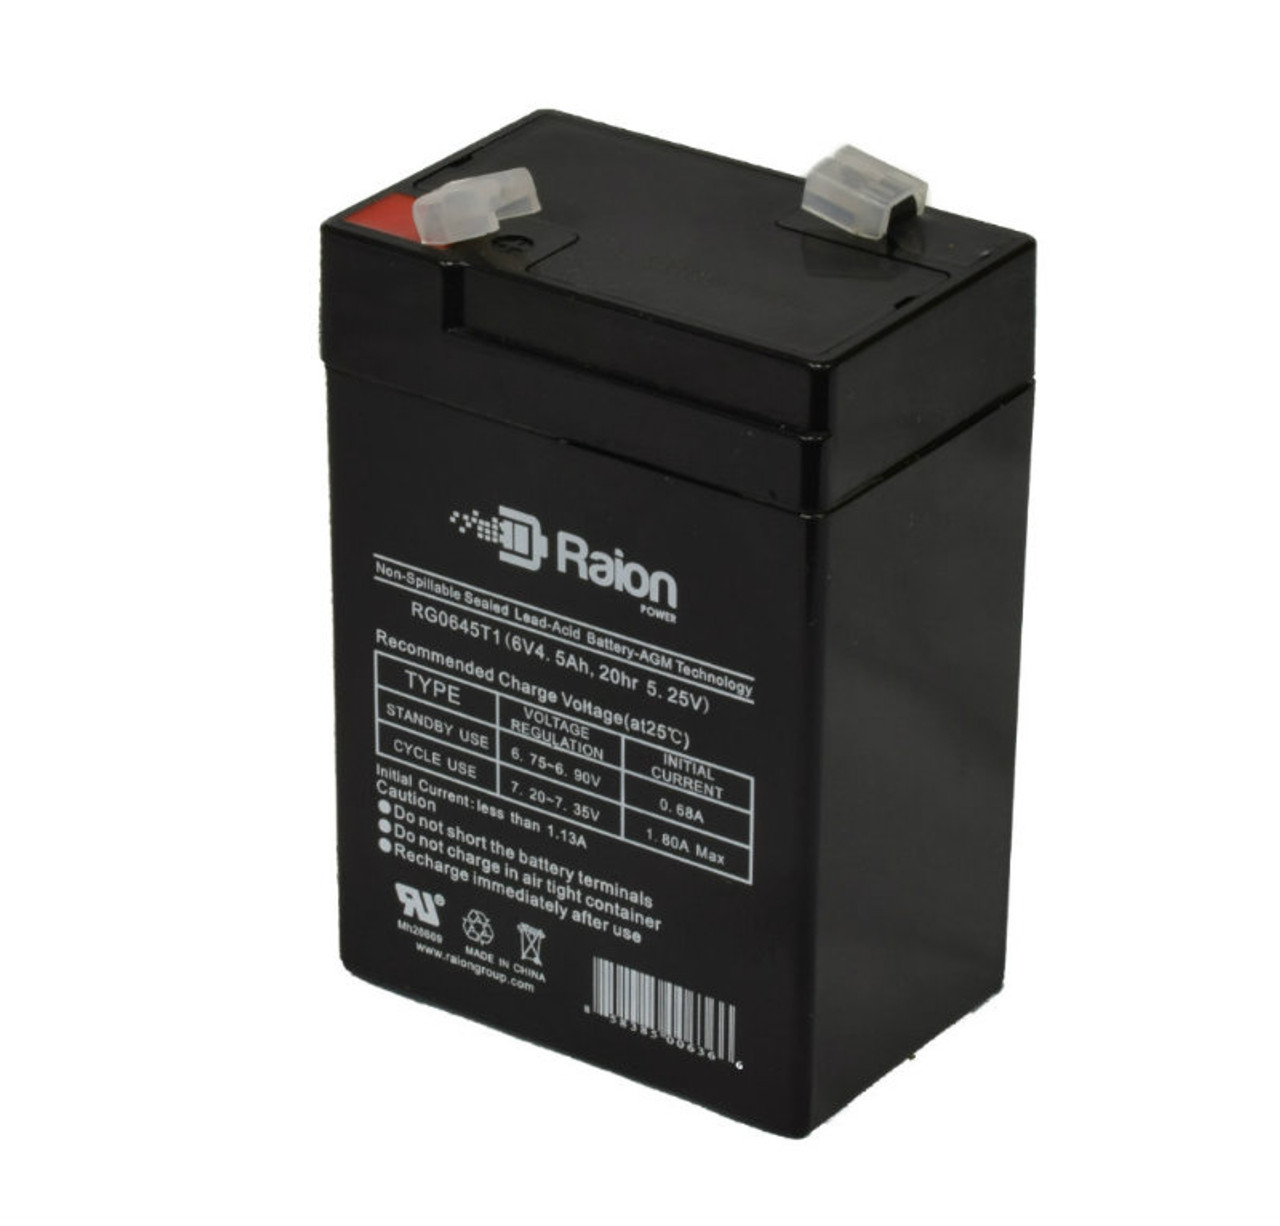 Raion Power RG0645T1 6V 4.5Ah Replacement Battery Cartridge for RYTON RT645